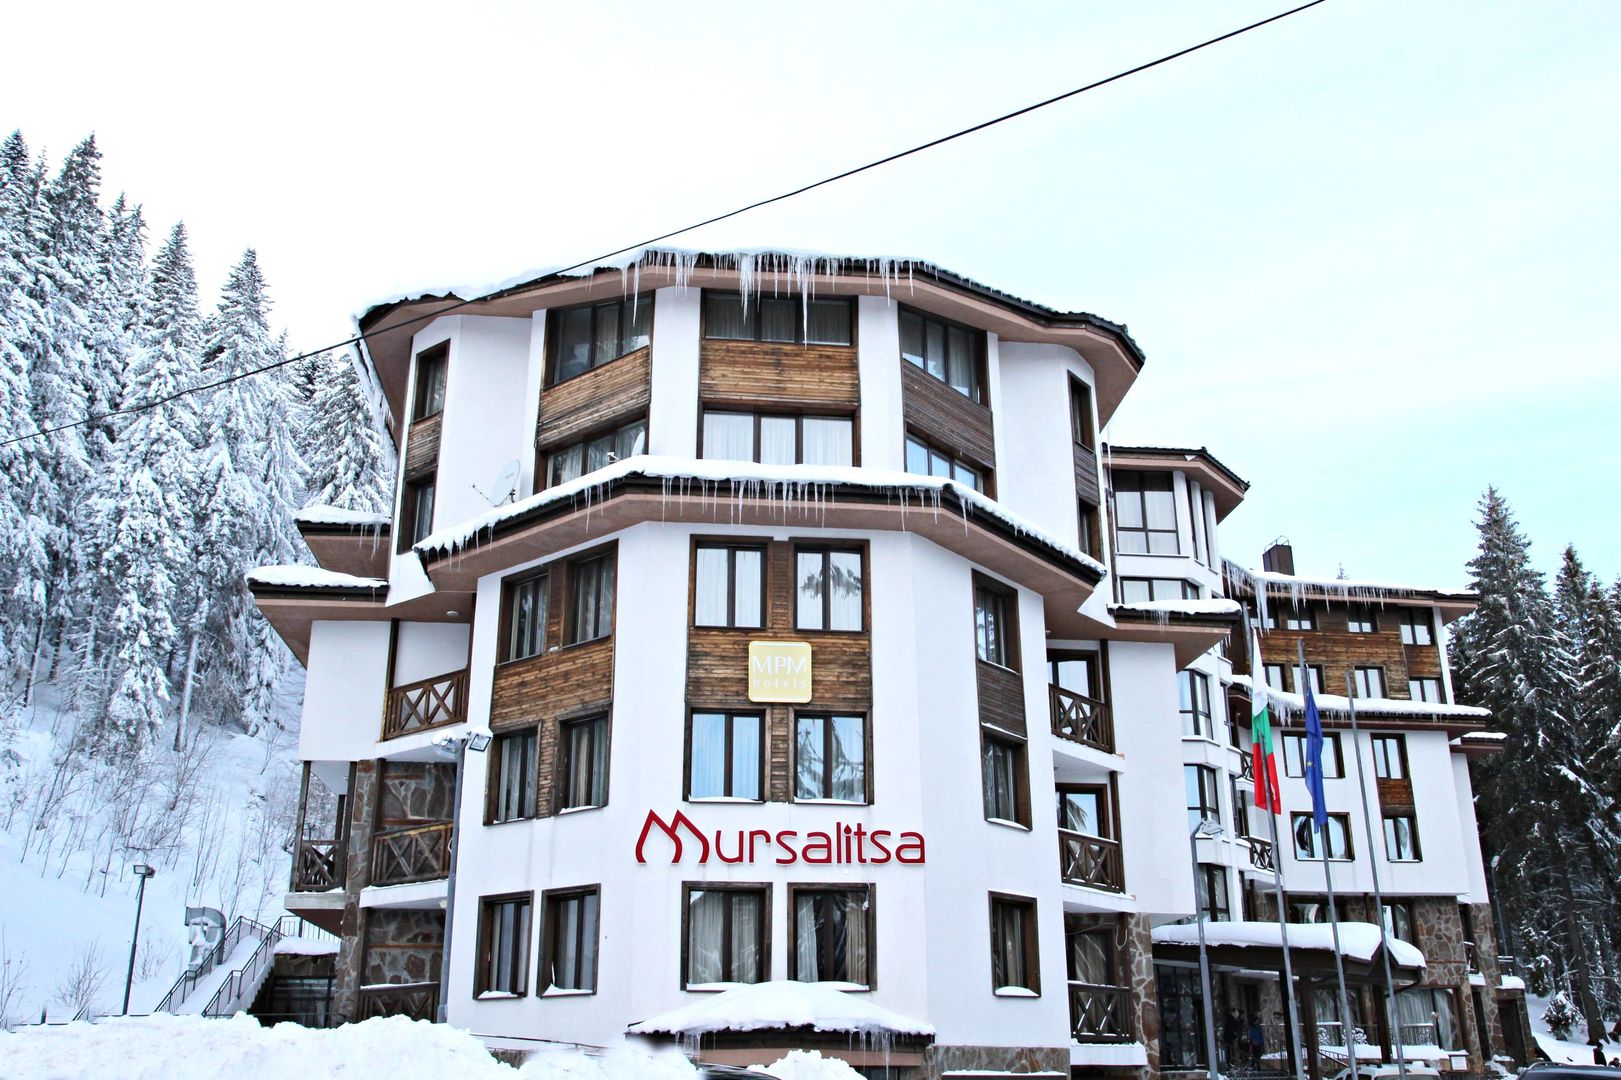 MPM Hotel Mursalitsa in Pamporovo, MPM Hotel Mursalitsa / Bulgarien